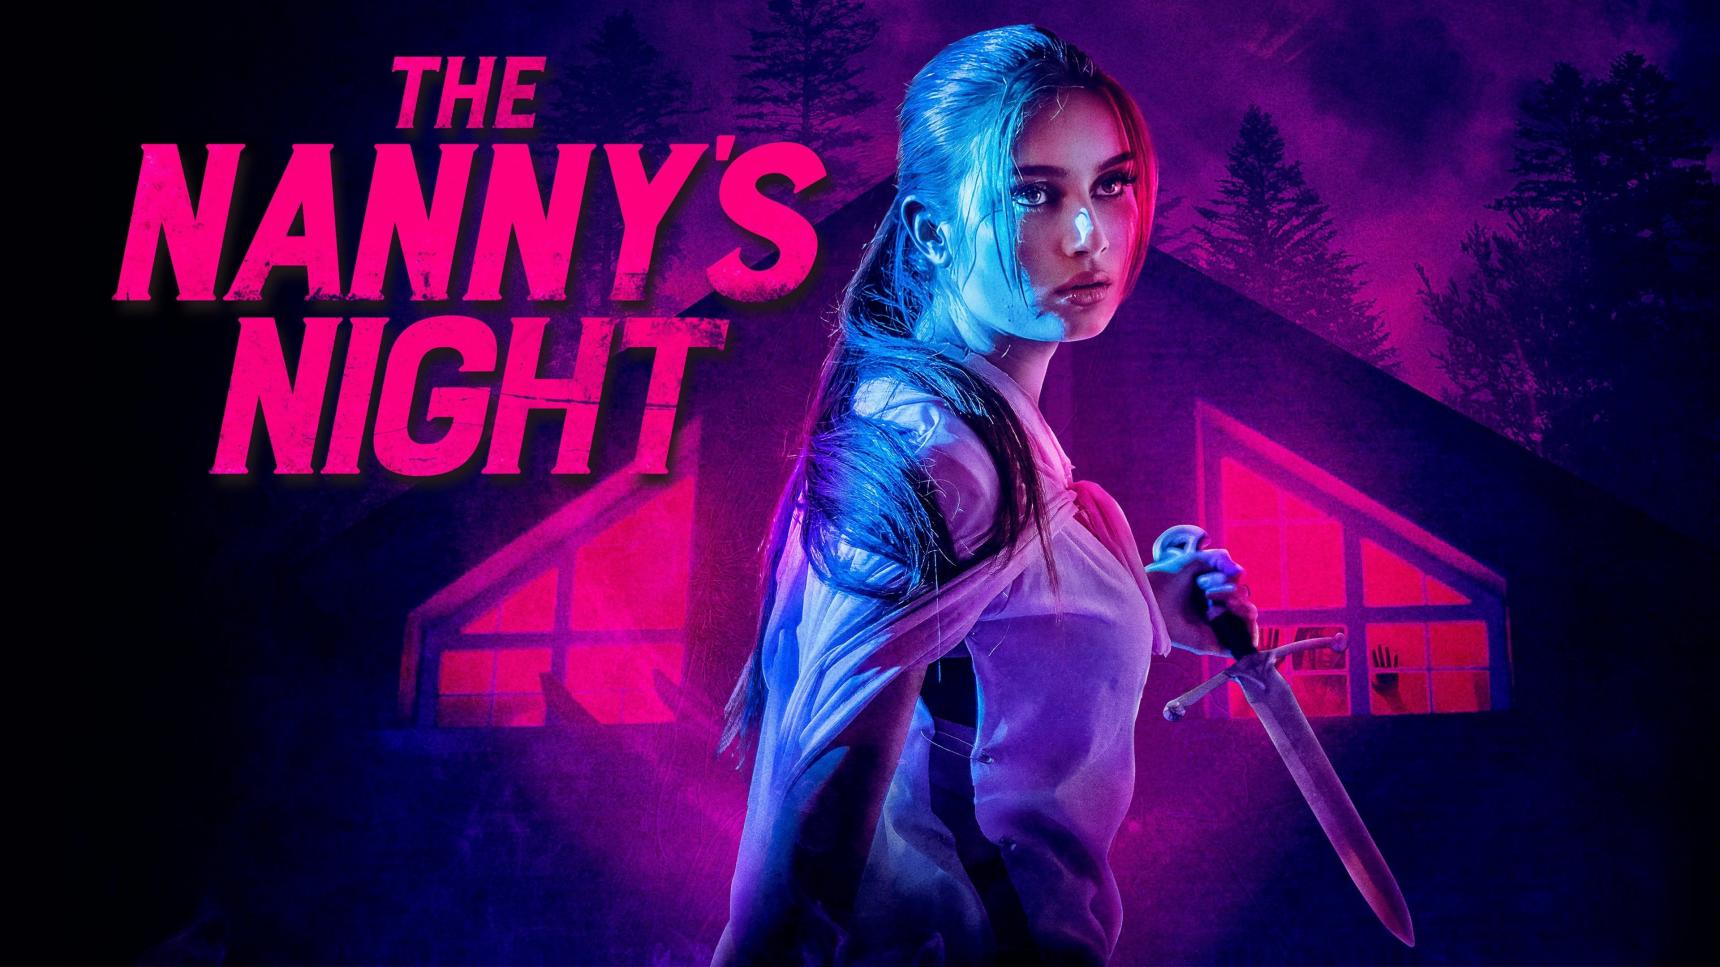 poster de The Nanny’s Night